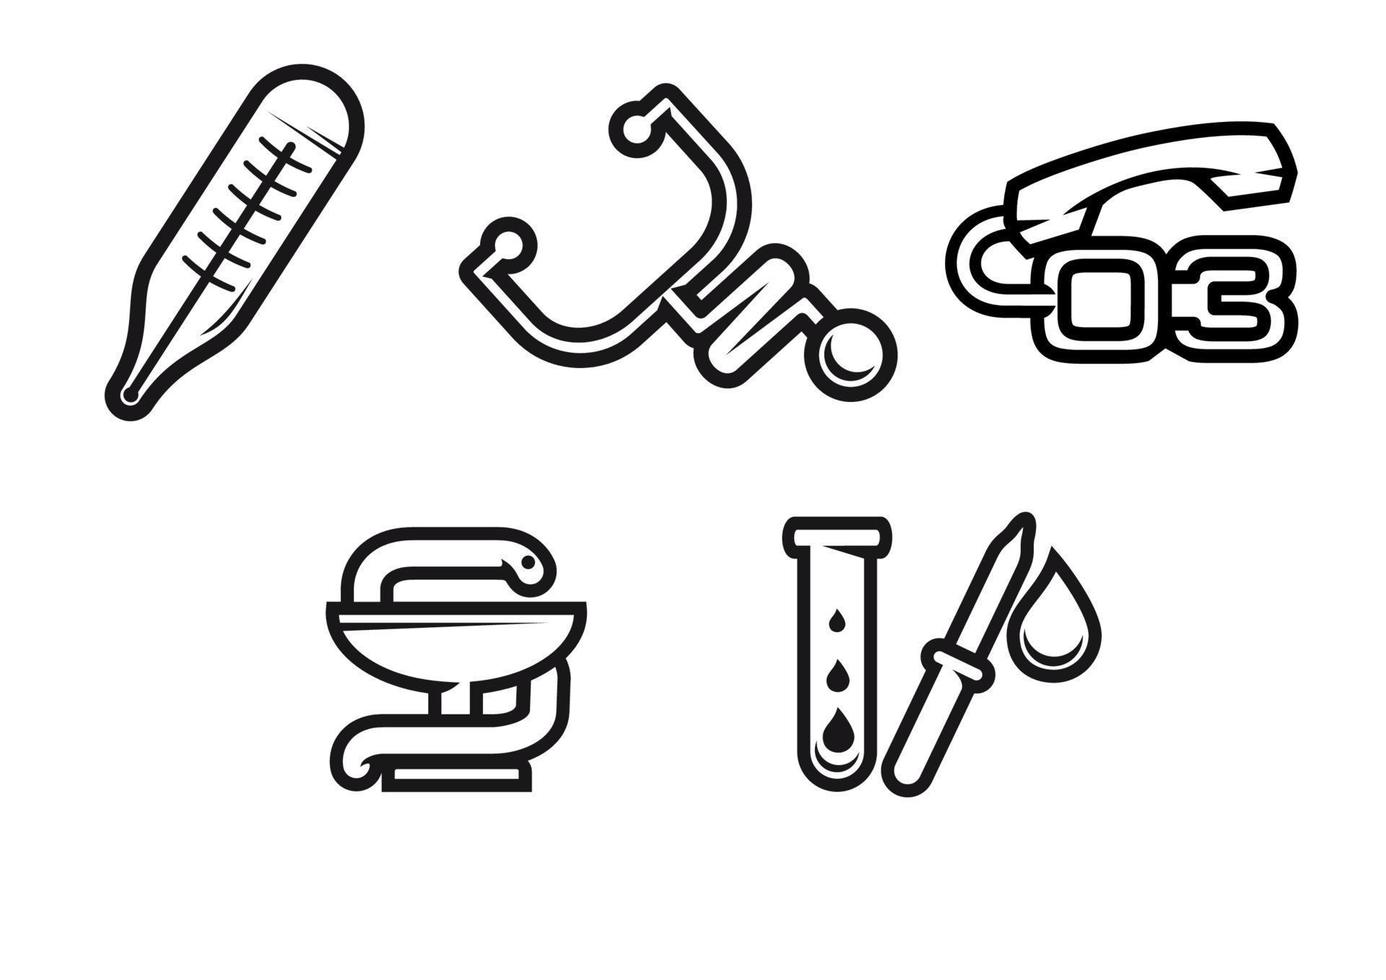 Medicine symbols and icons vector